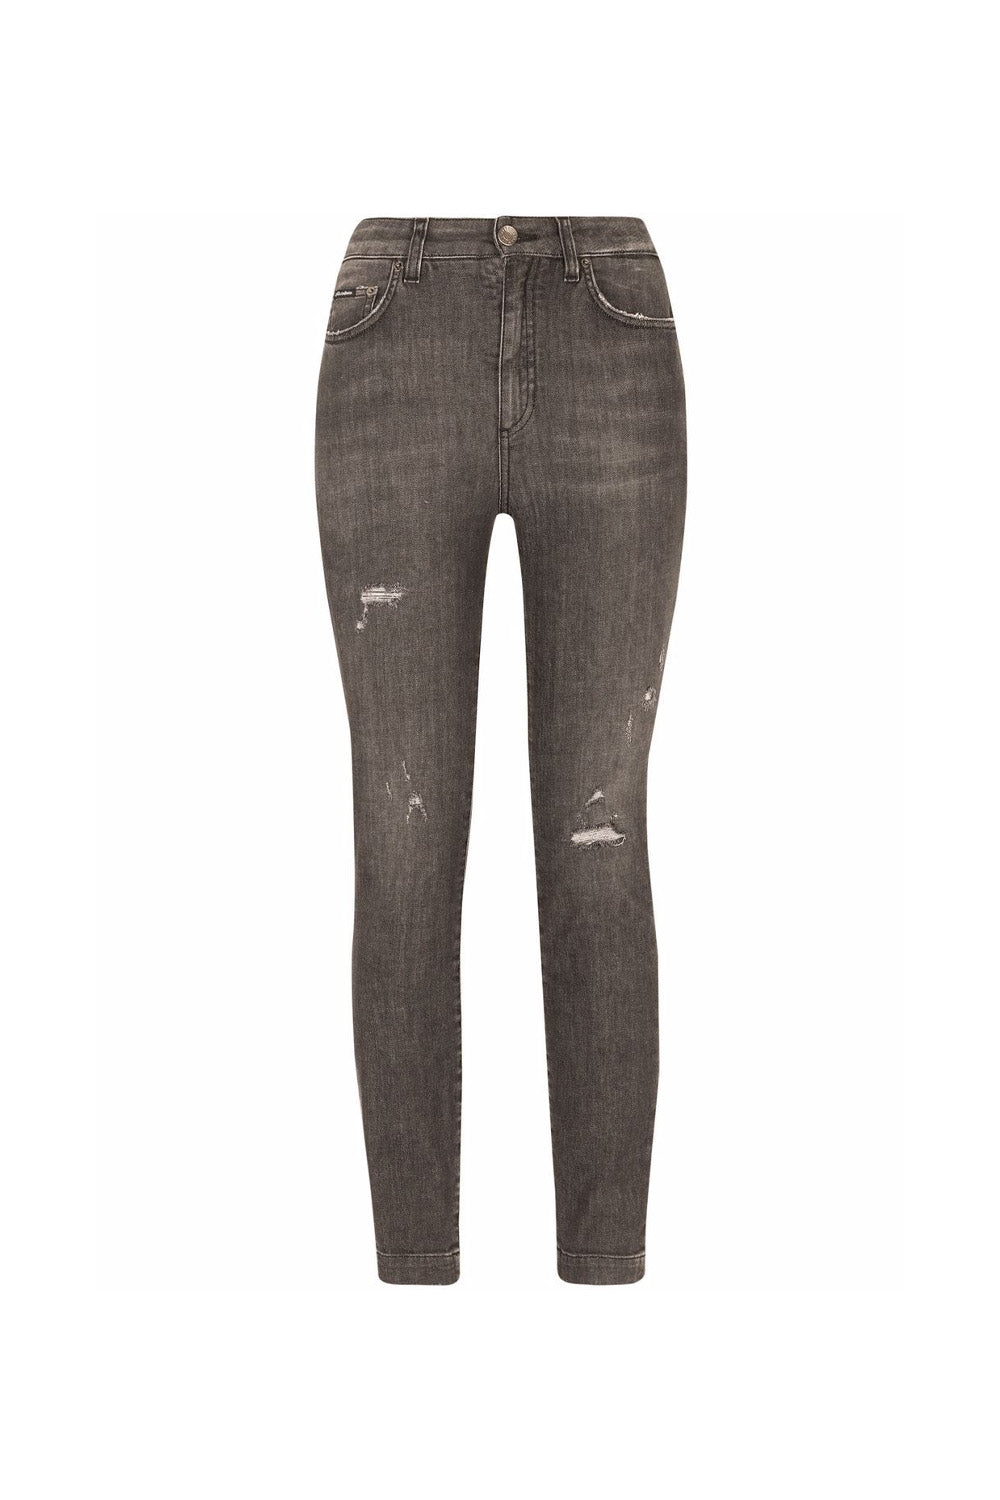 Dolce & Gabbana high-waist distressed skinny jeans